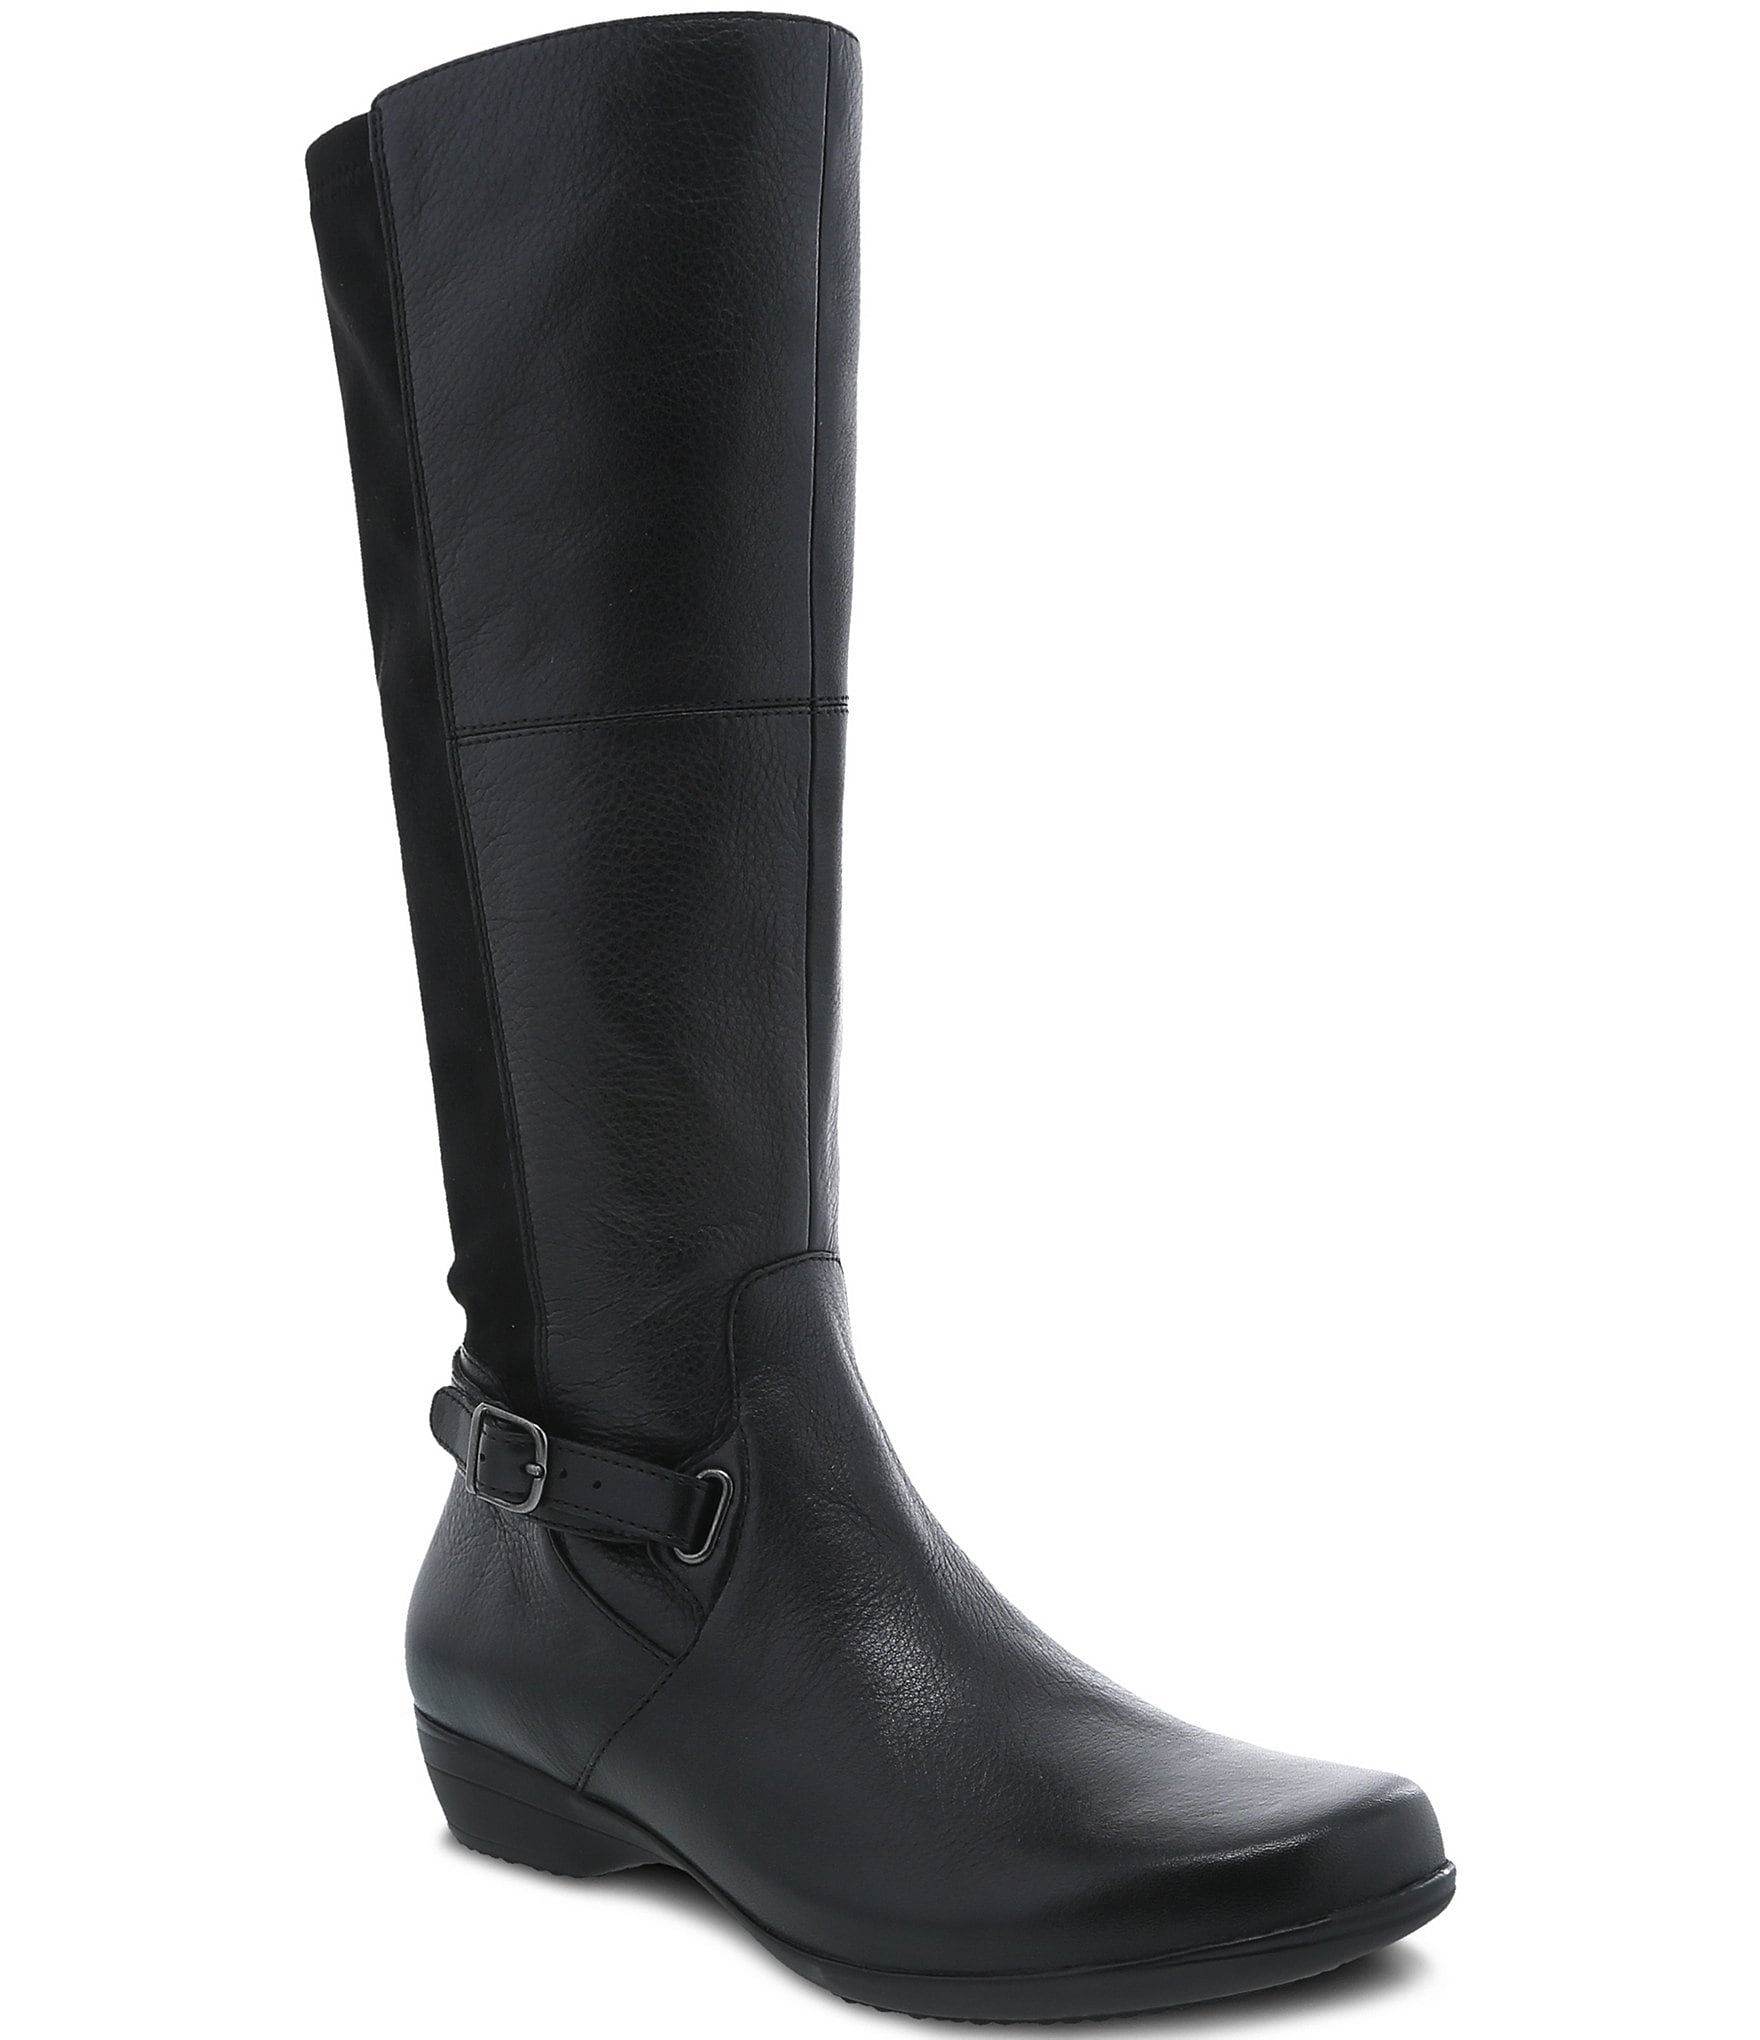 dansko black leather boots